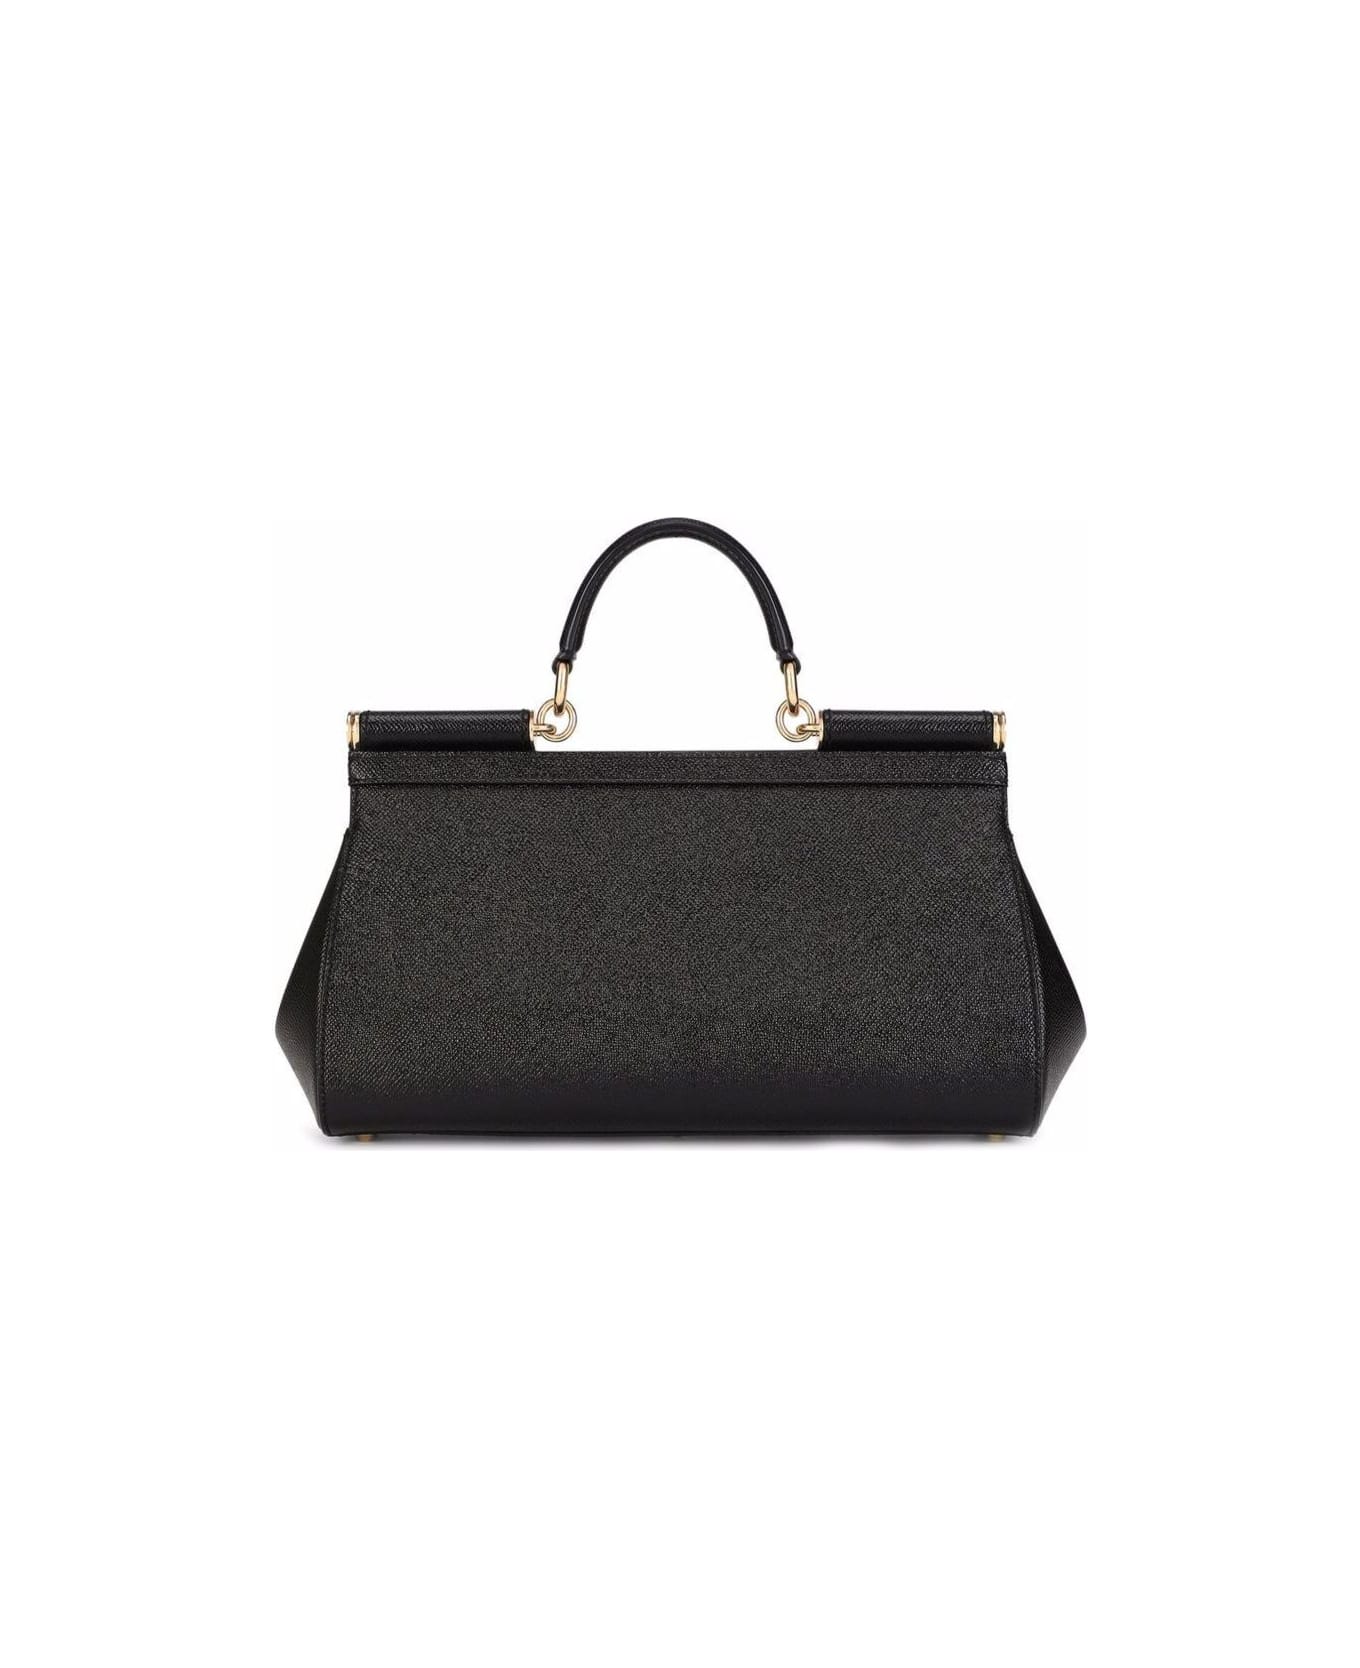 Dolce & Gabbana 'medium Sicily' Black Handbag With Branded Galvanic Plaque In Dauphine Leather Woman - Black